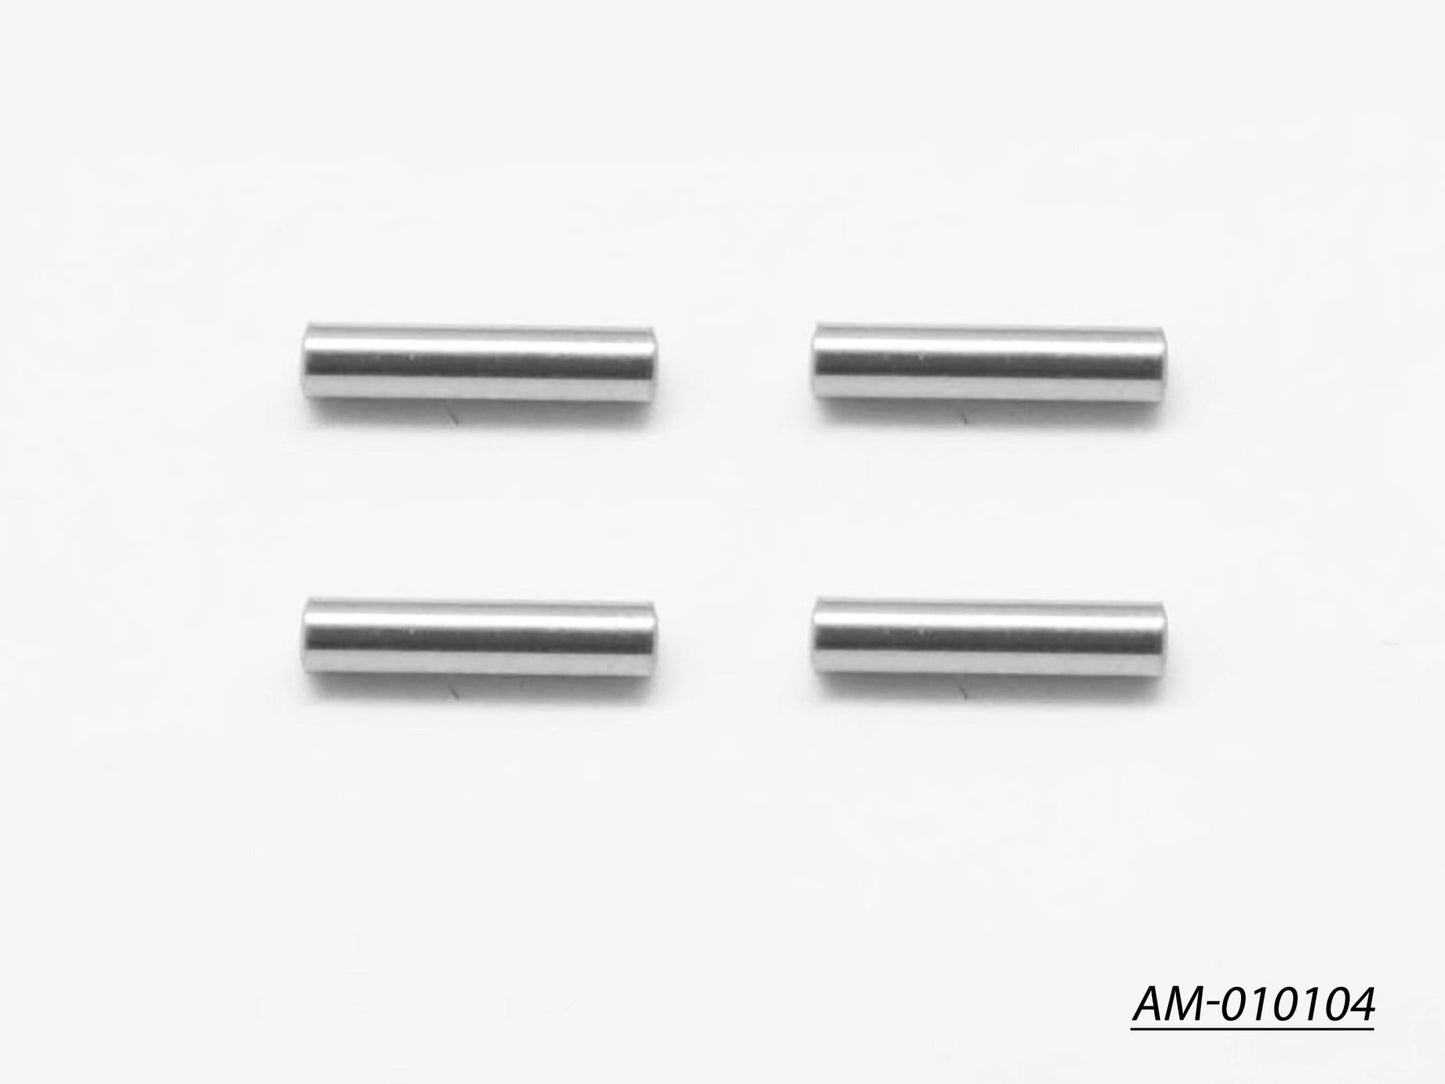 Pin Set For Ecs Drive Shaft V2 (AM-010104)